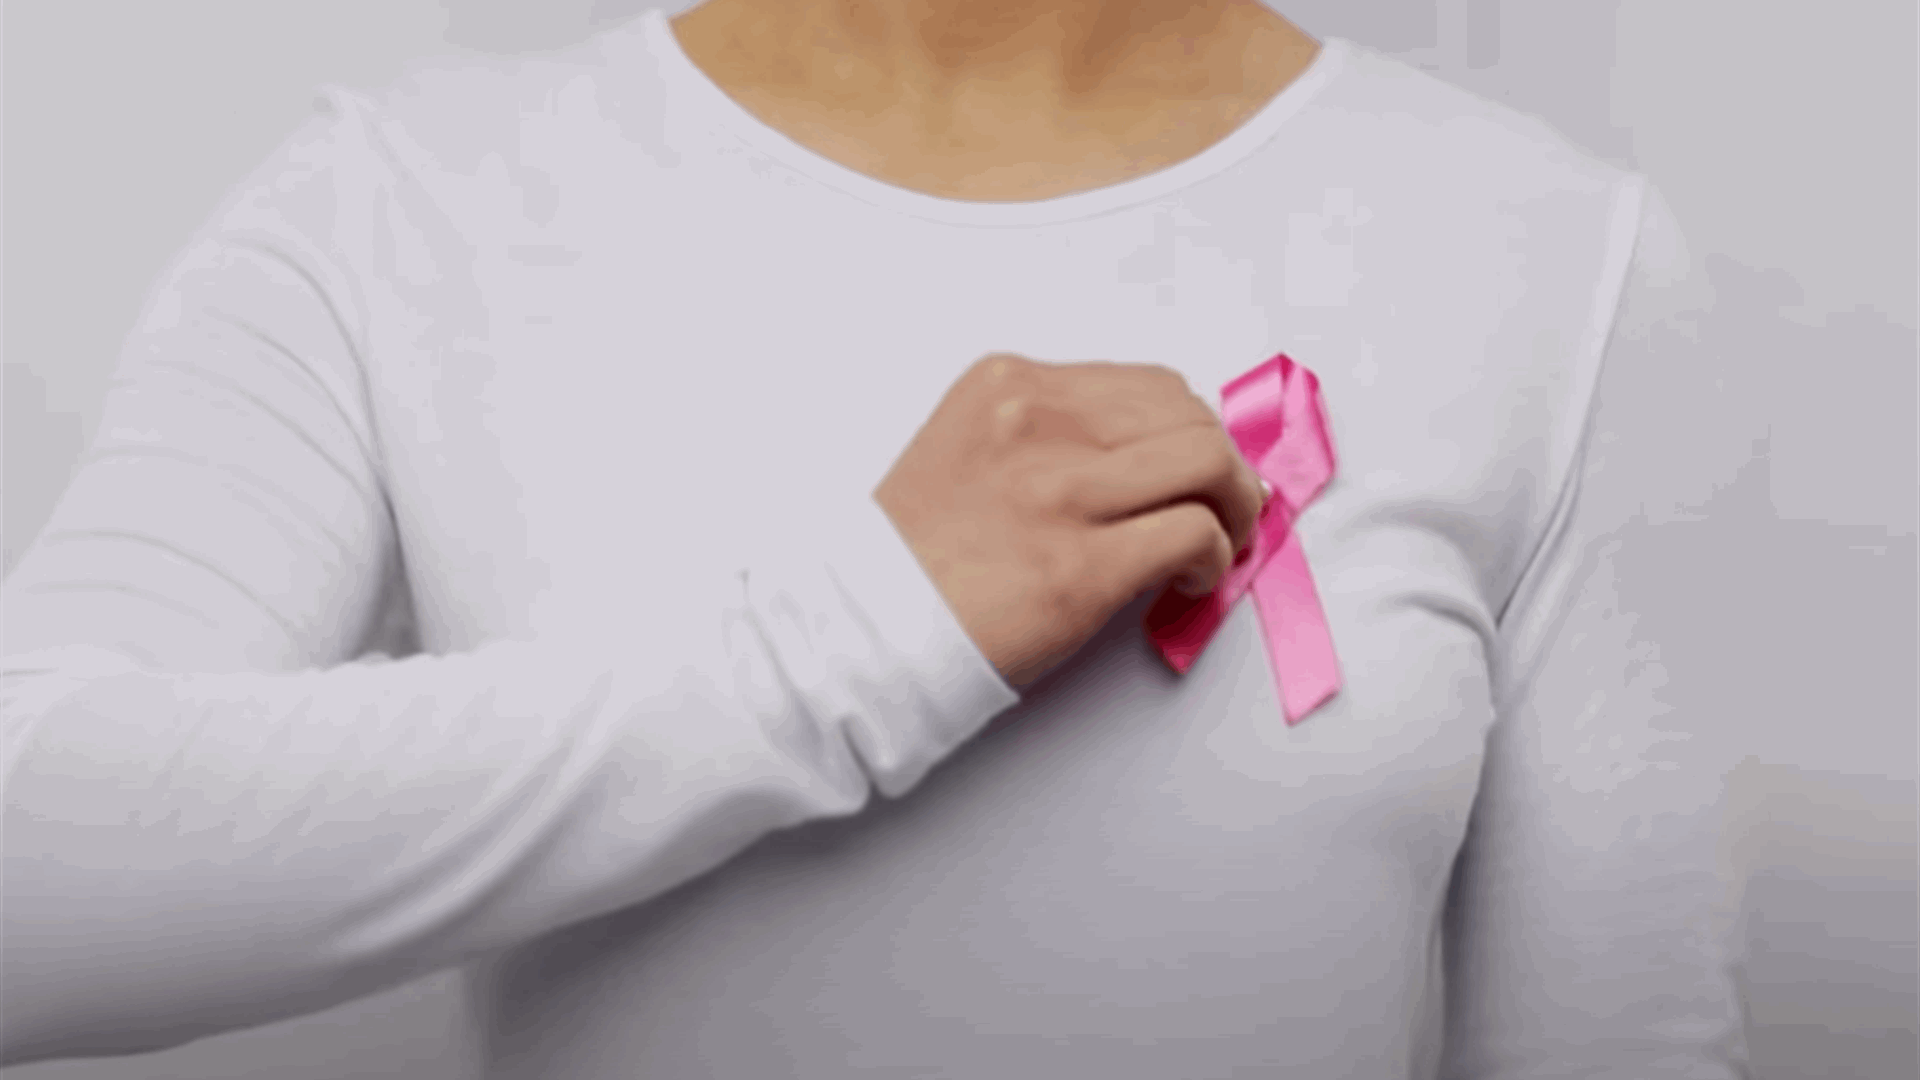 &quot;لأنّو سرطان الثدي إنت بتهزميه كمّلنا!&quot;... بعد تأجيلها: ترقبوا الحلقة المخصصة بالتوعية حول سرطان الثدي الليلة!